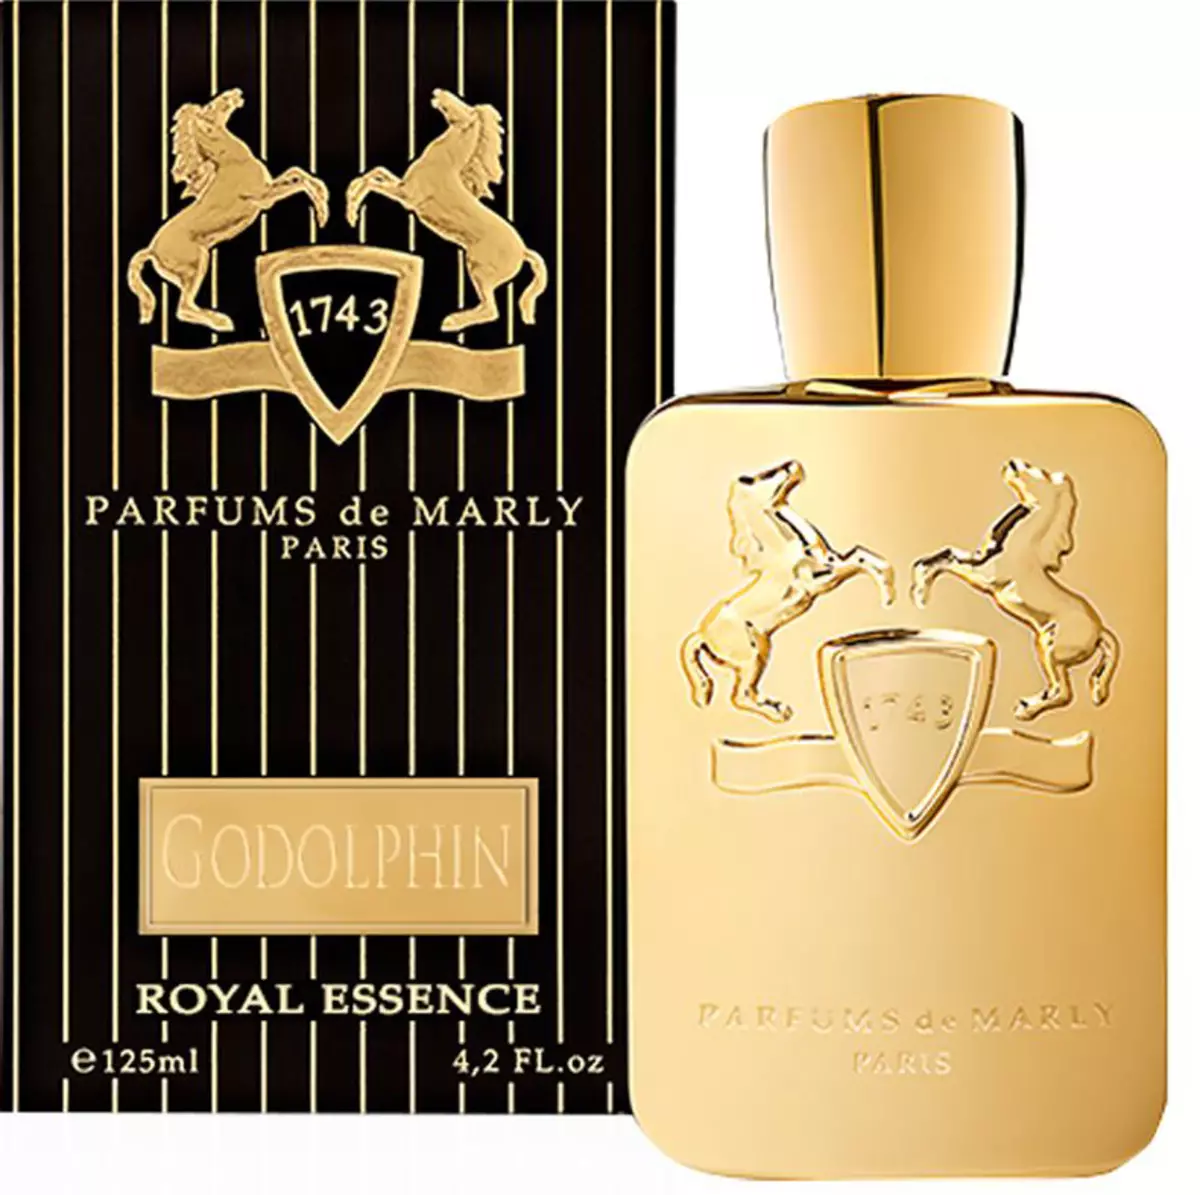 Parfums de marly perfumes: டெலினா, meloiora மற்றும் layton, erood மற்றும் darley, cassili மற்றும் பிற ஆவிகள், தேர்வு அளவுகோல், விமர்சனங்களை 25169_15